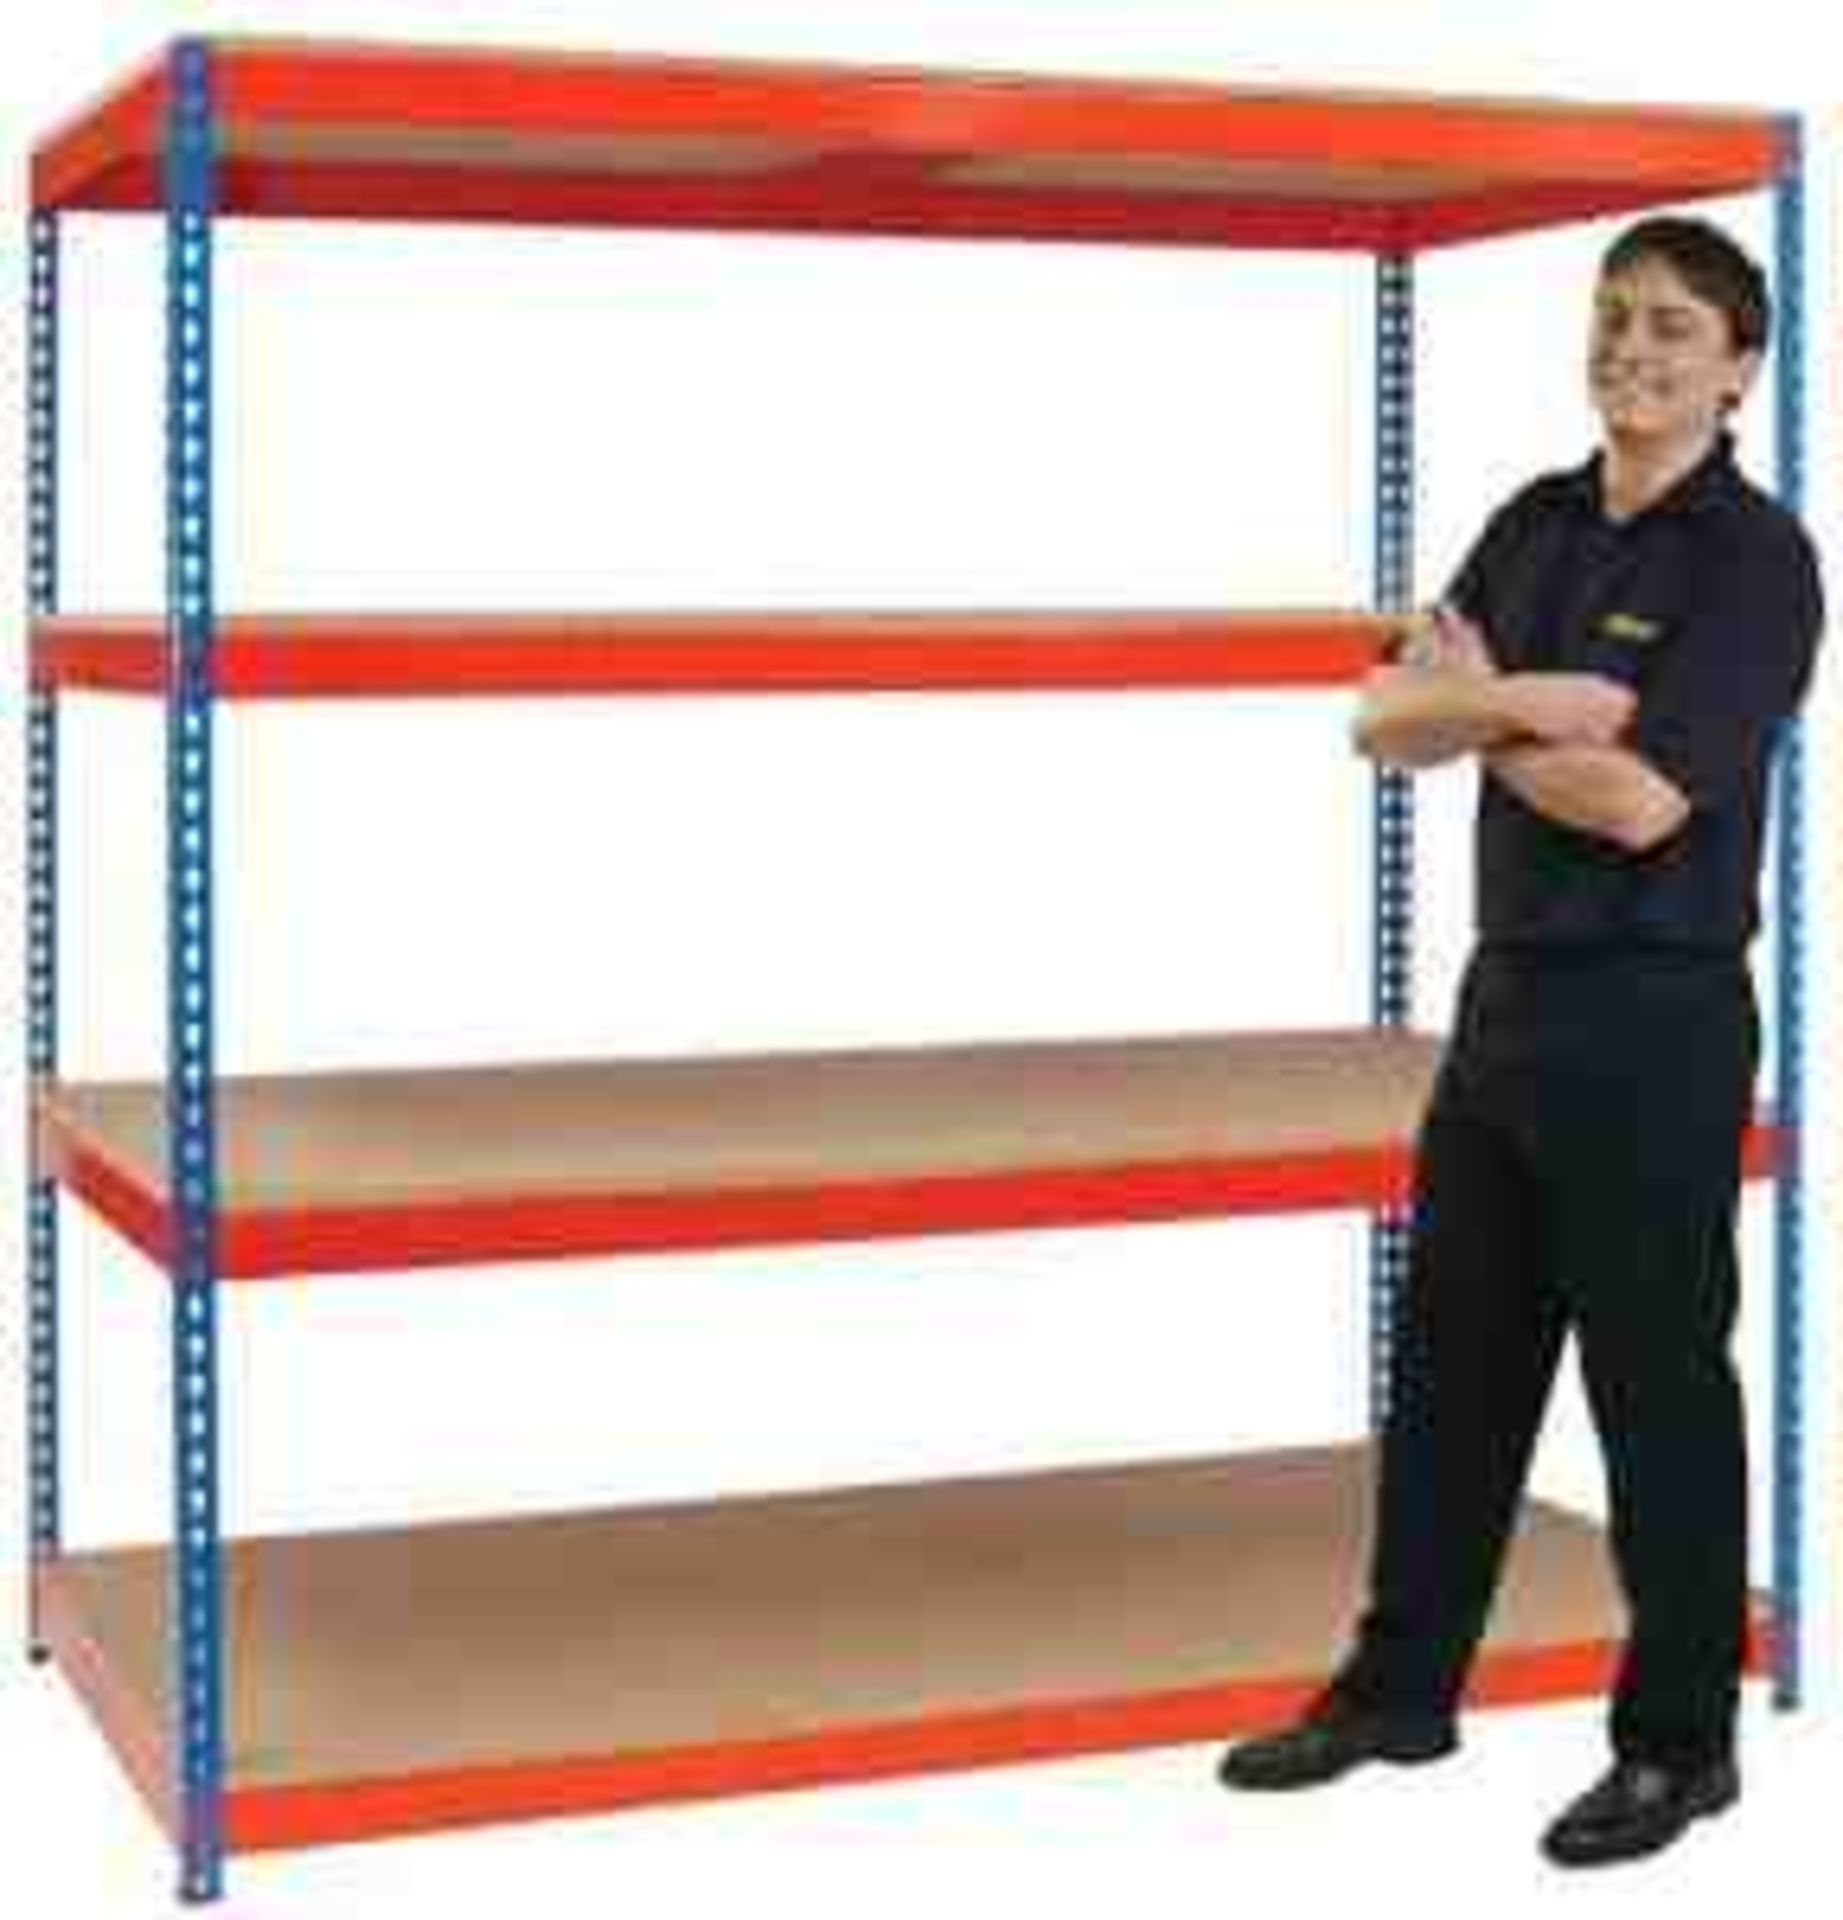 3 x Bays of Heavy Duty Rivet Storage Racking - Blue & Orange - Excellent Business Shelving